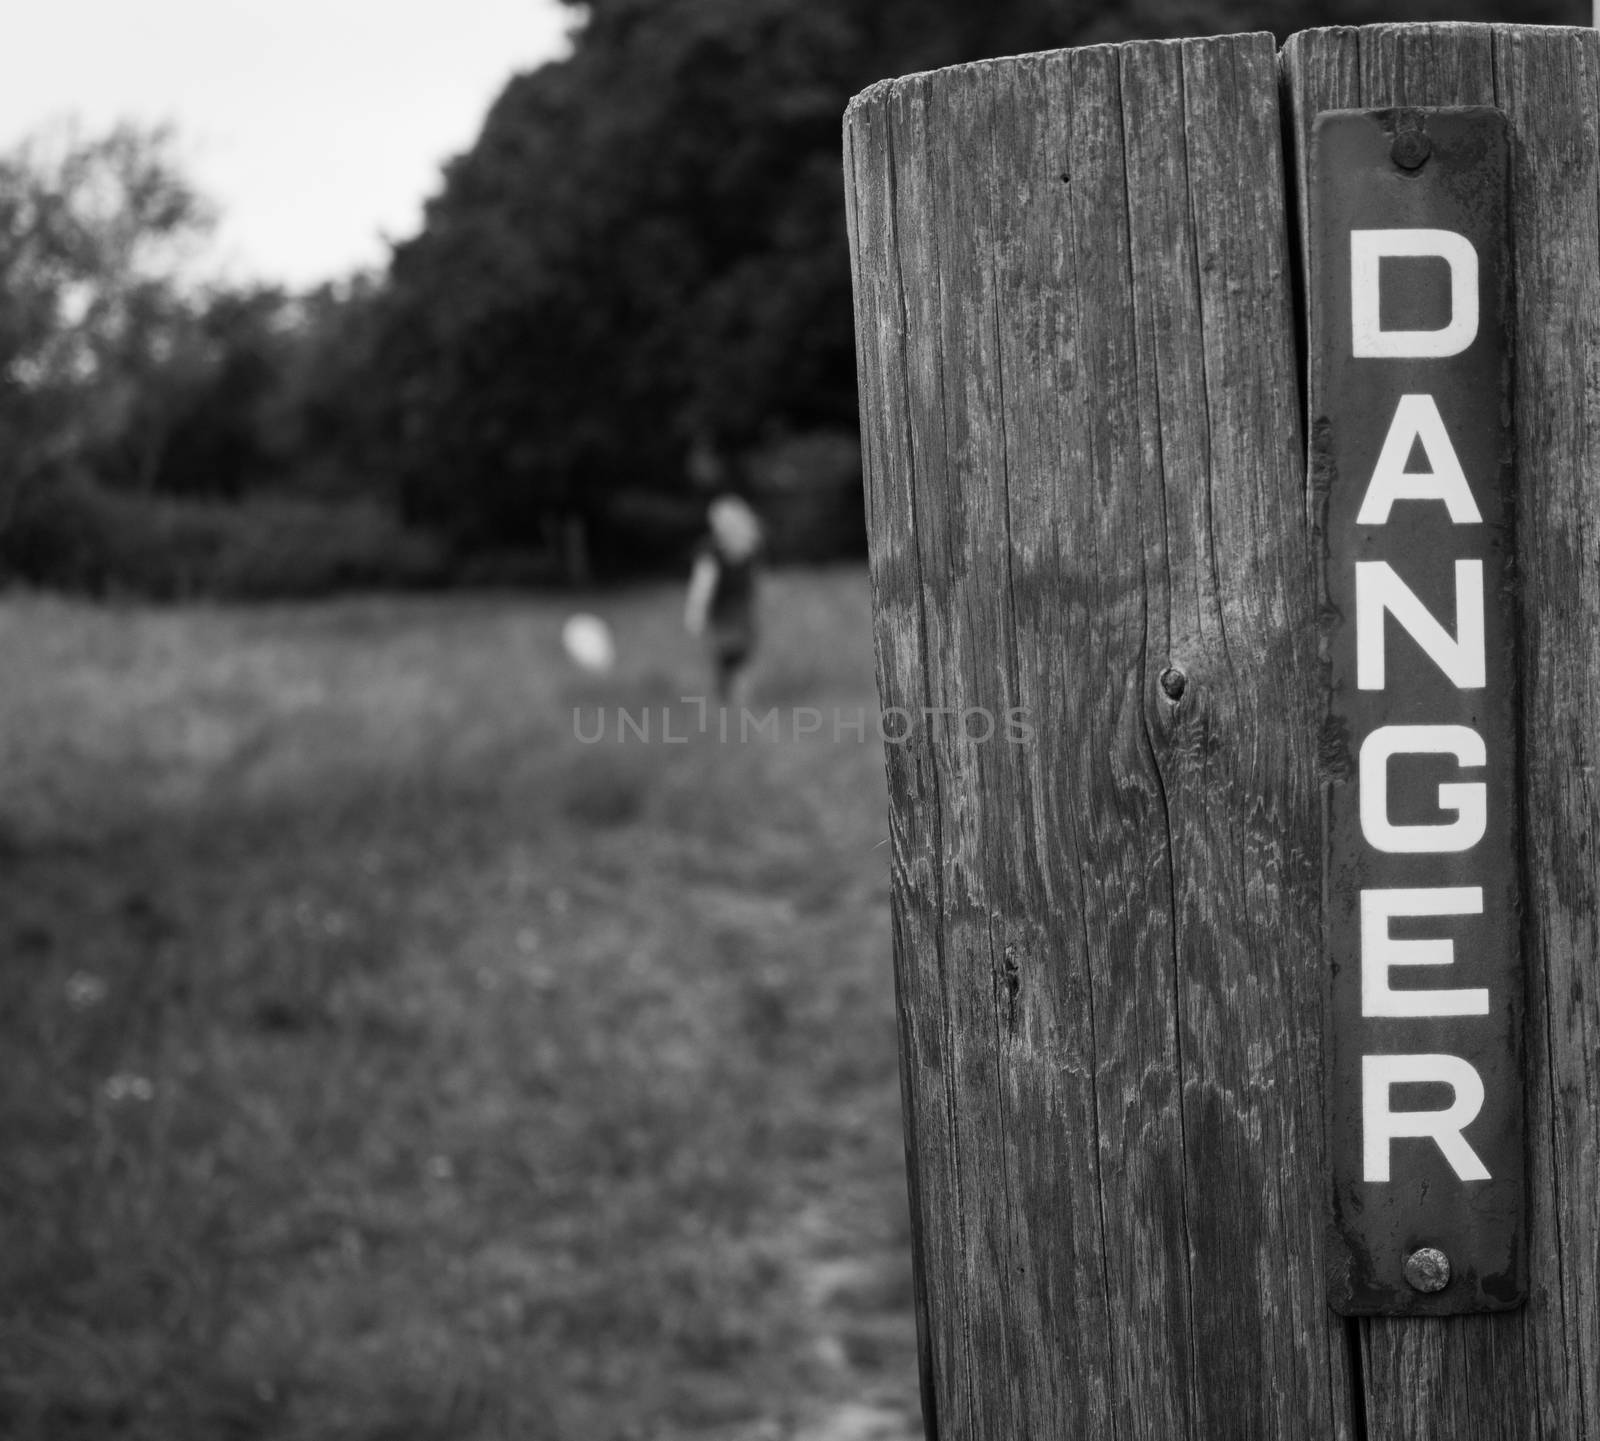 Danger Sign by ernest_davies